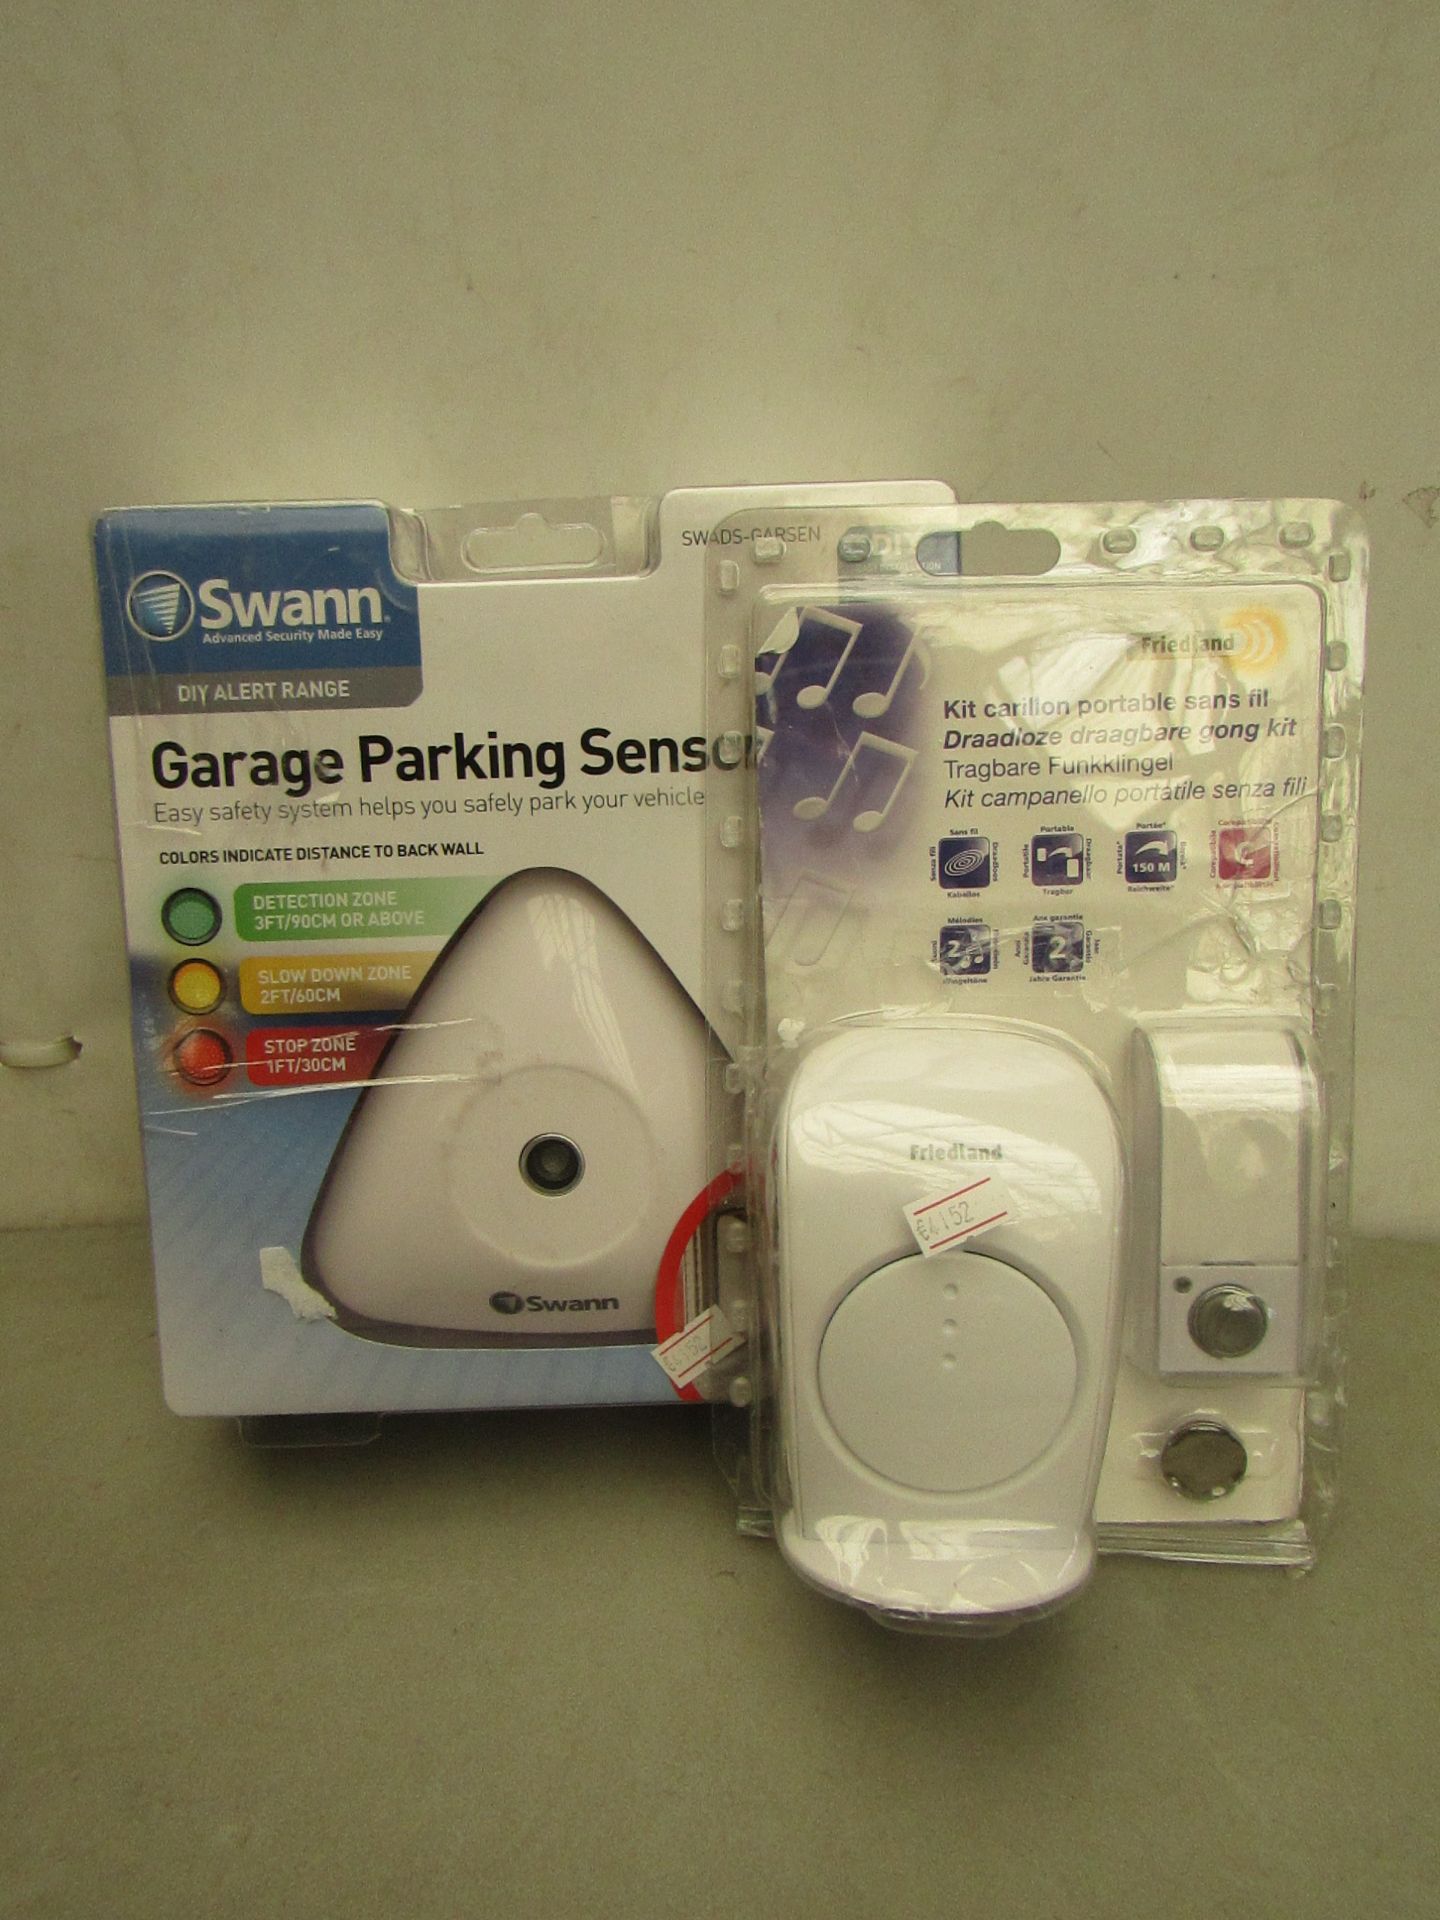 2 x Items being 1 x Friedland Doorbell and 1 x Swann Garage Parking Sensor, both unchecked